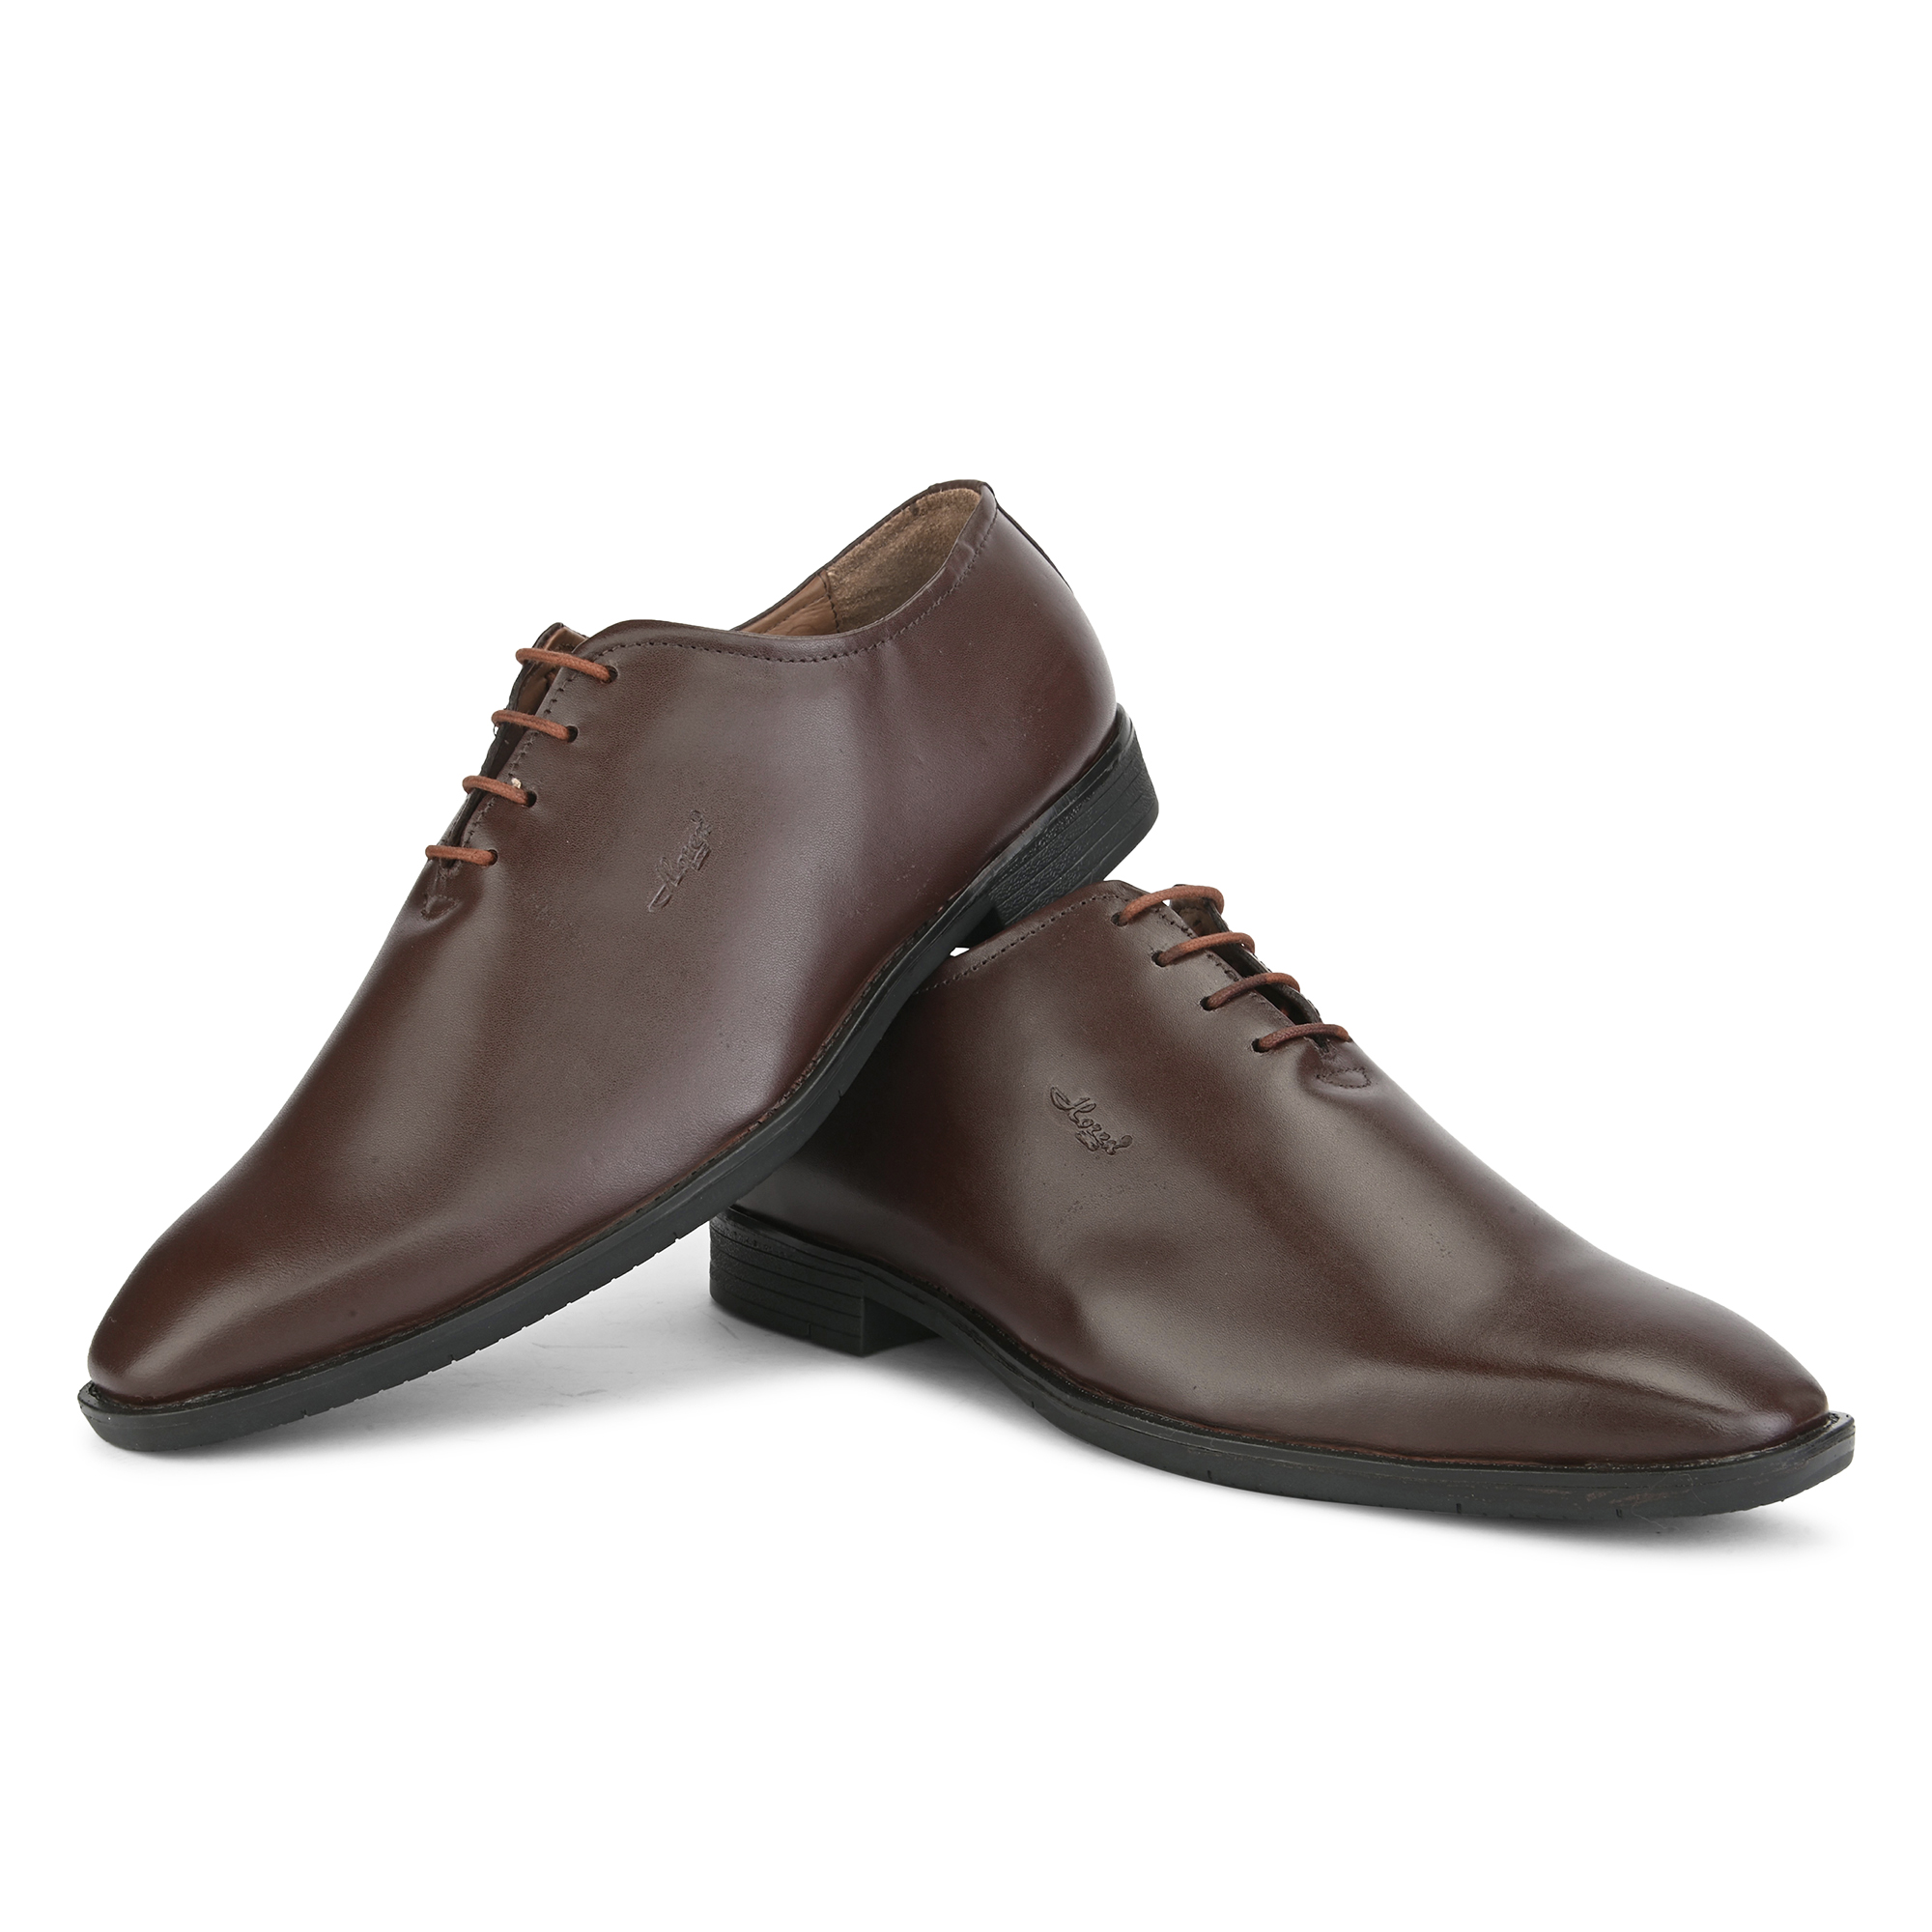 horex formal shoes for suits